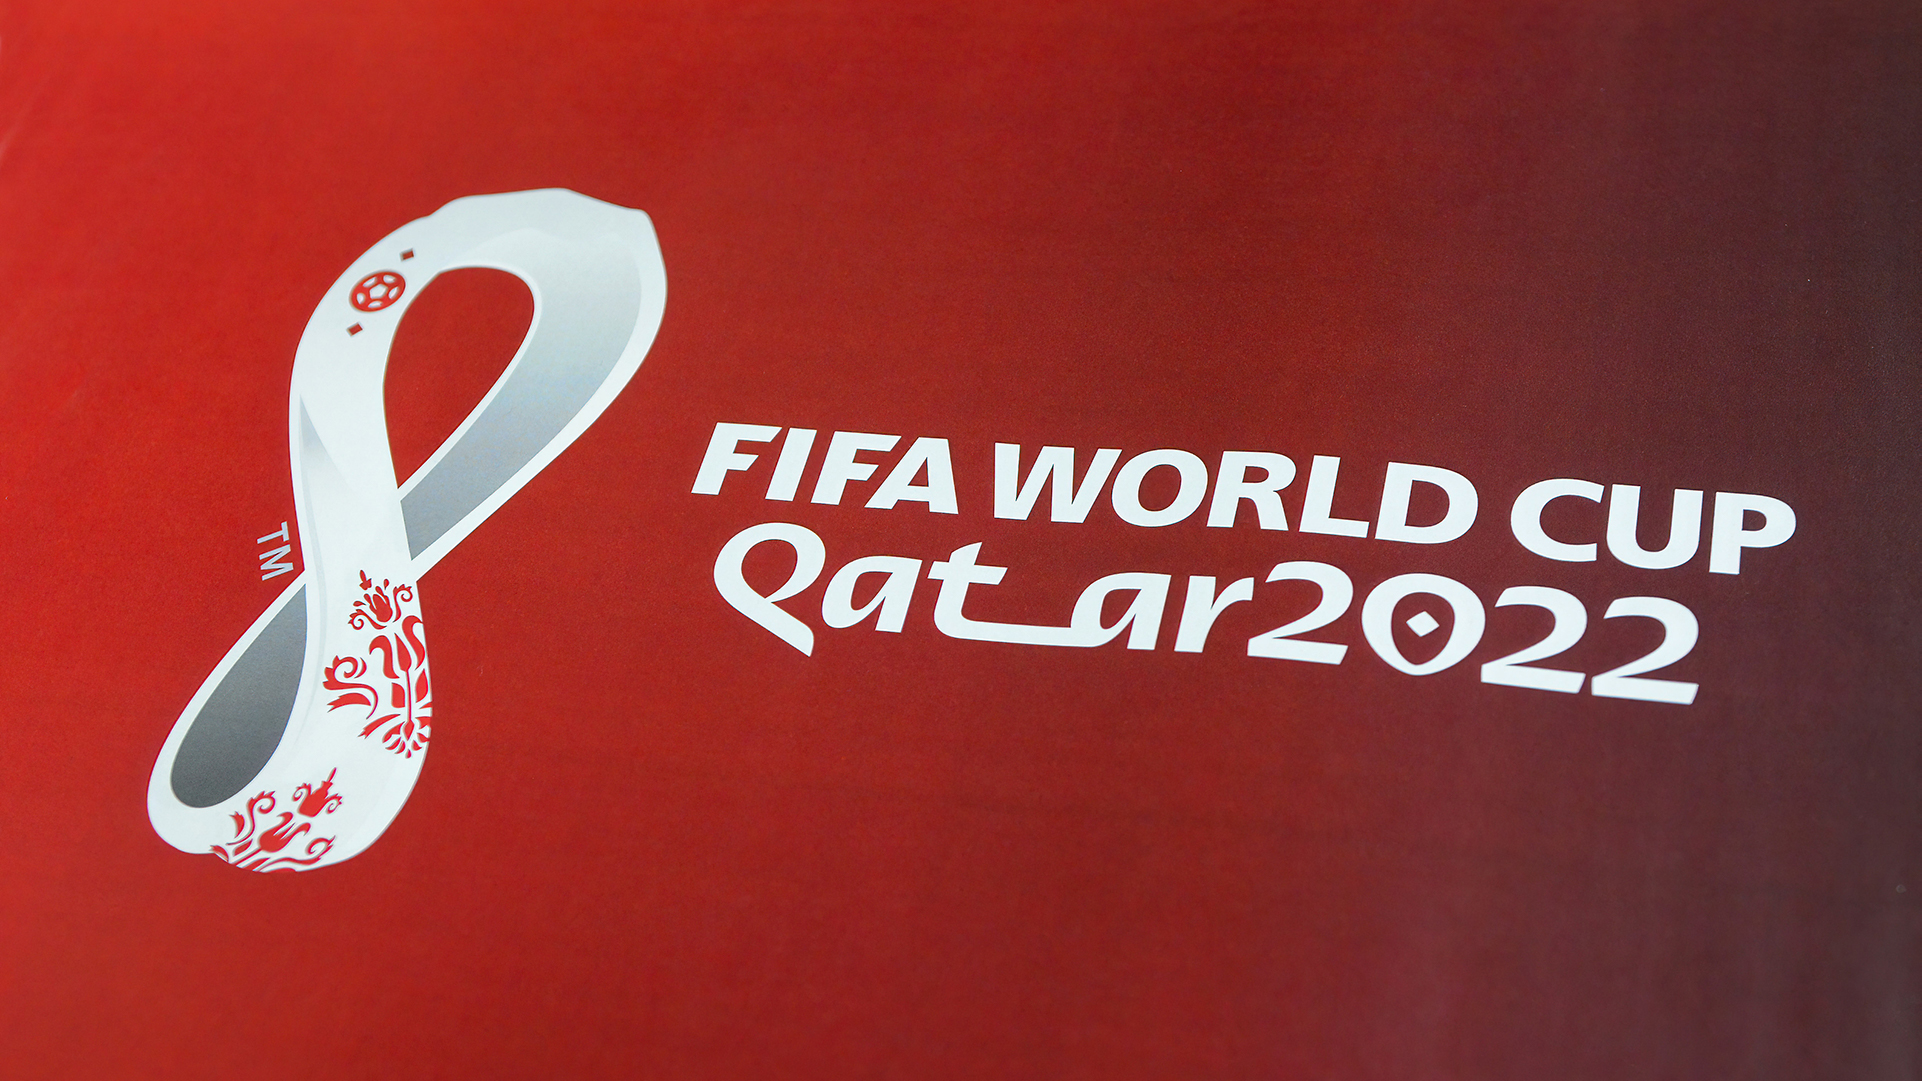 WM 2022 Katar FIFA World Cup